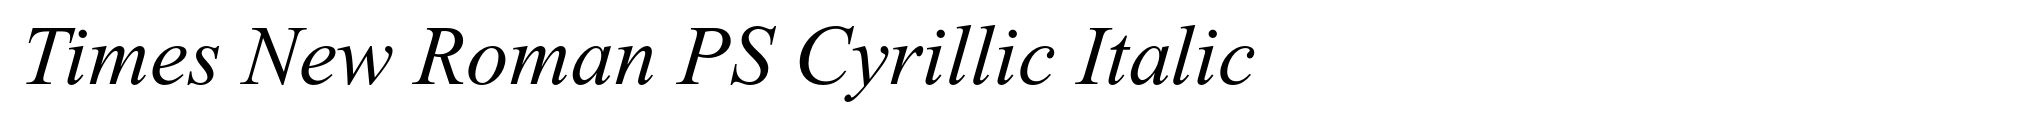 Times New Roman PS Cyrillic Italic image